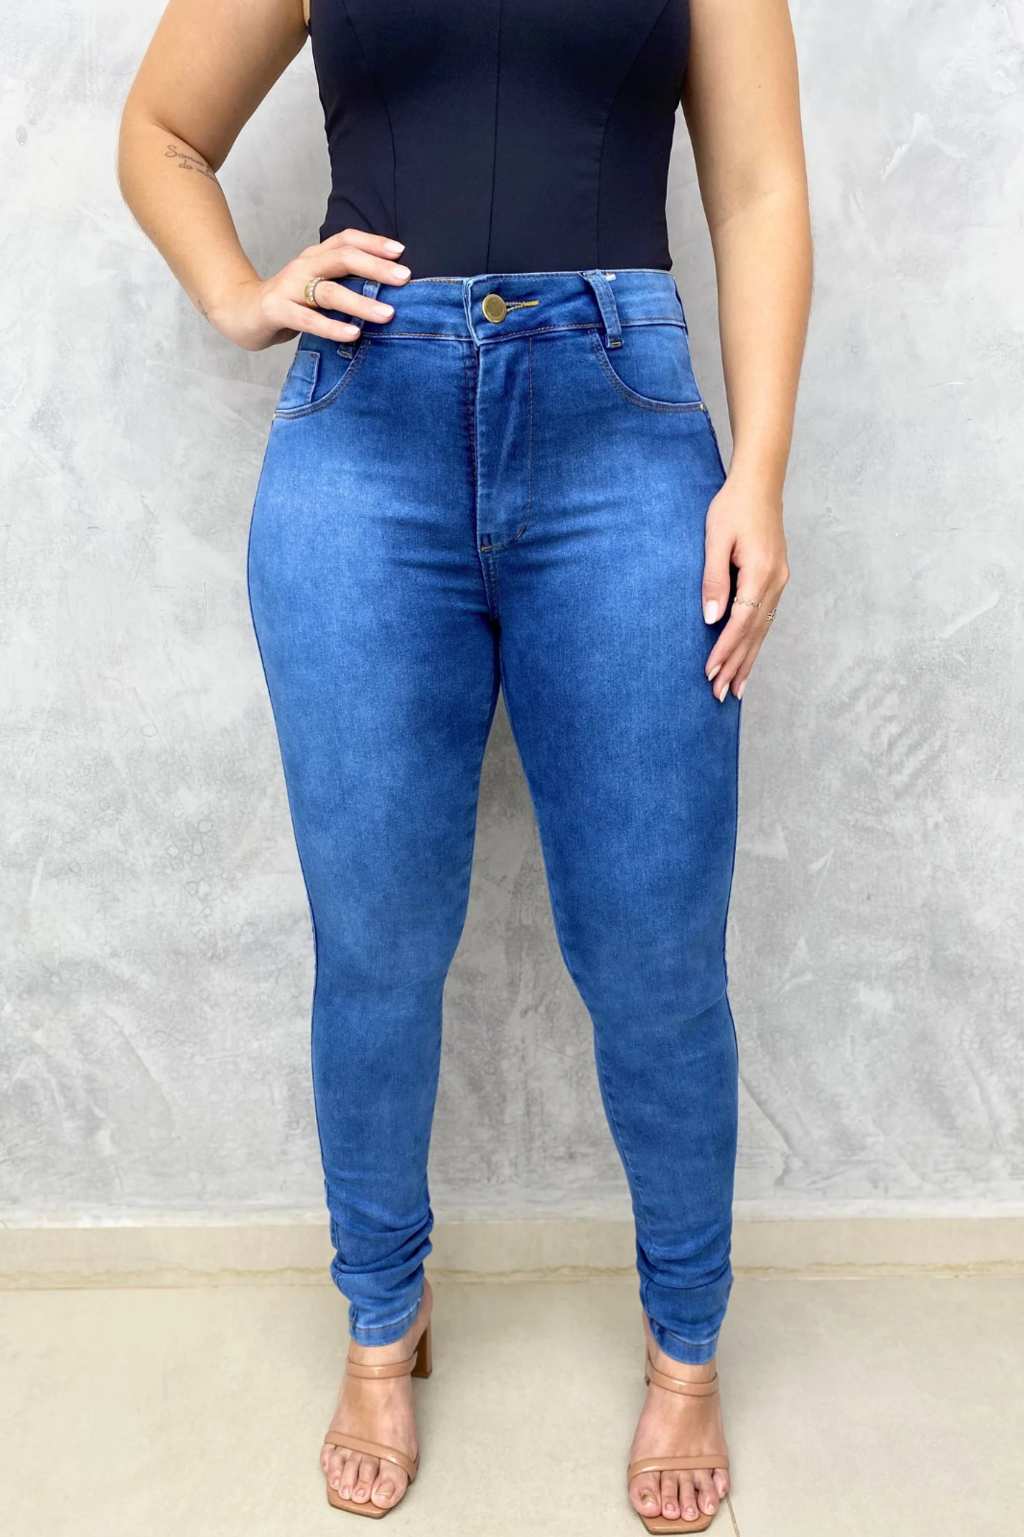 Moda Jeans Plus Size Fashionable Calças Jeans Skinny Lavadas